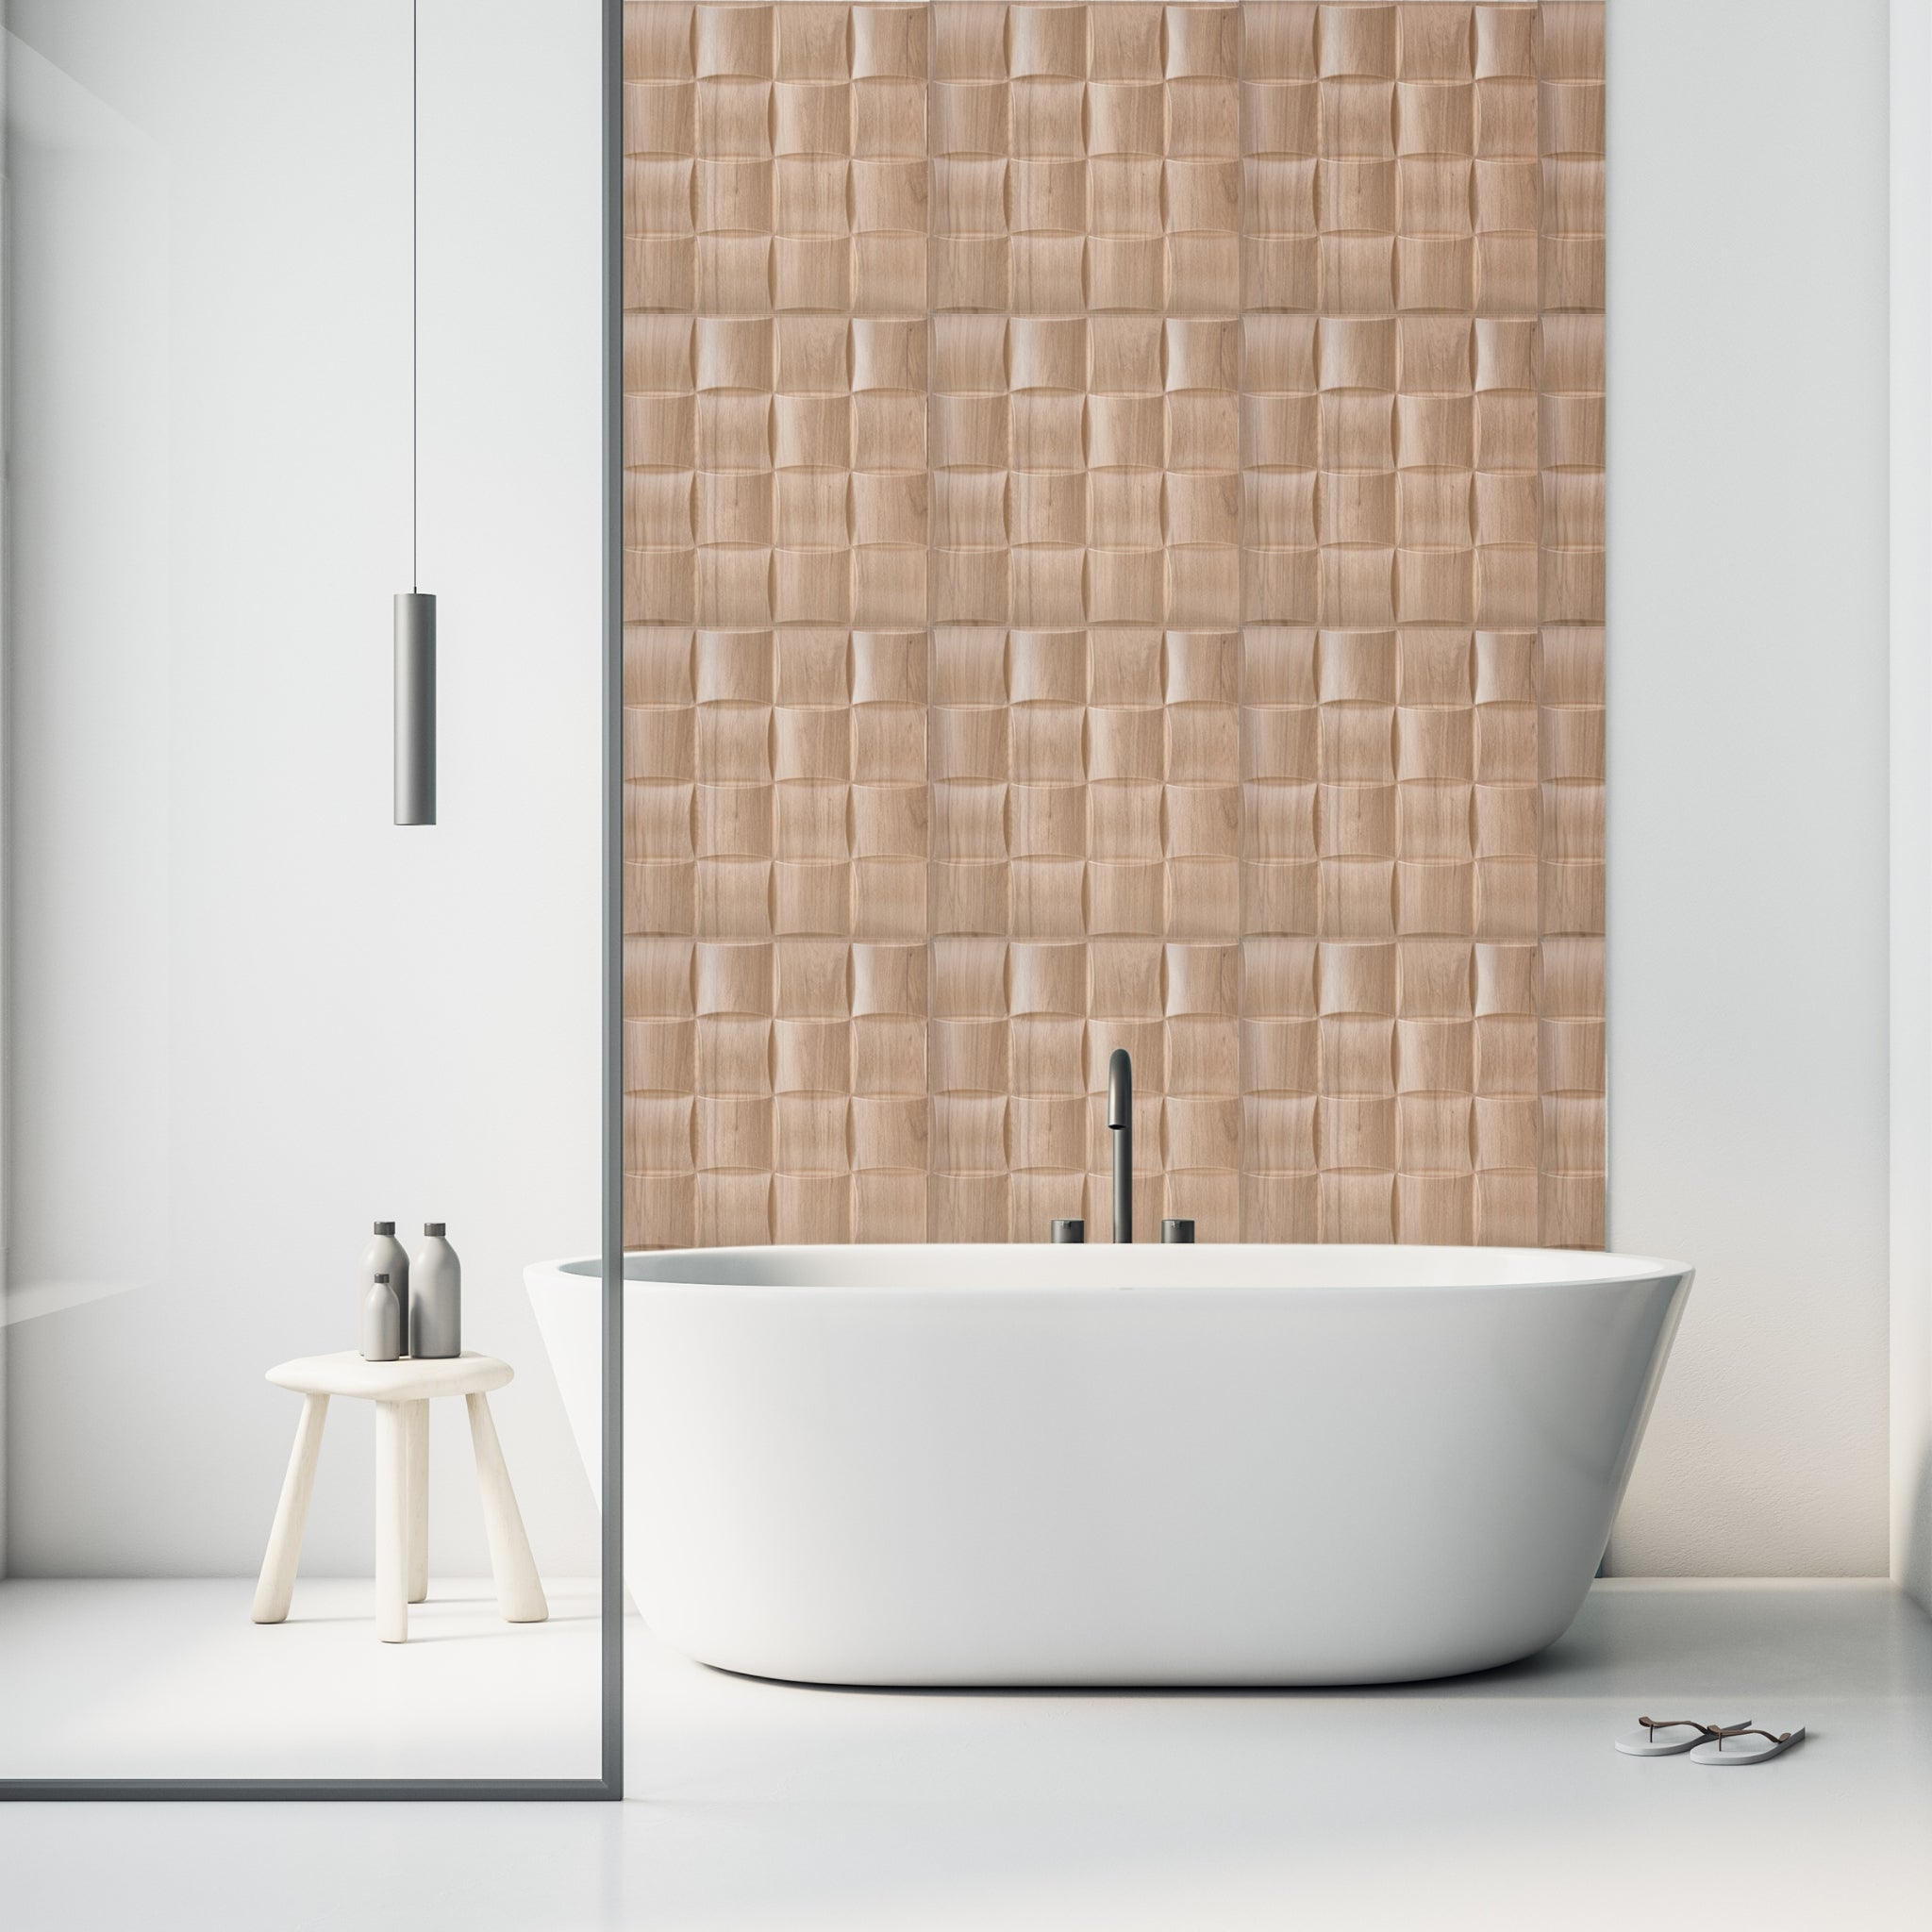 Wooden 50x50 cm PVC wall panel in minimalist bathroom setting